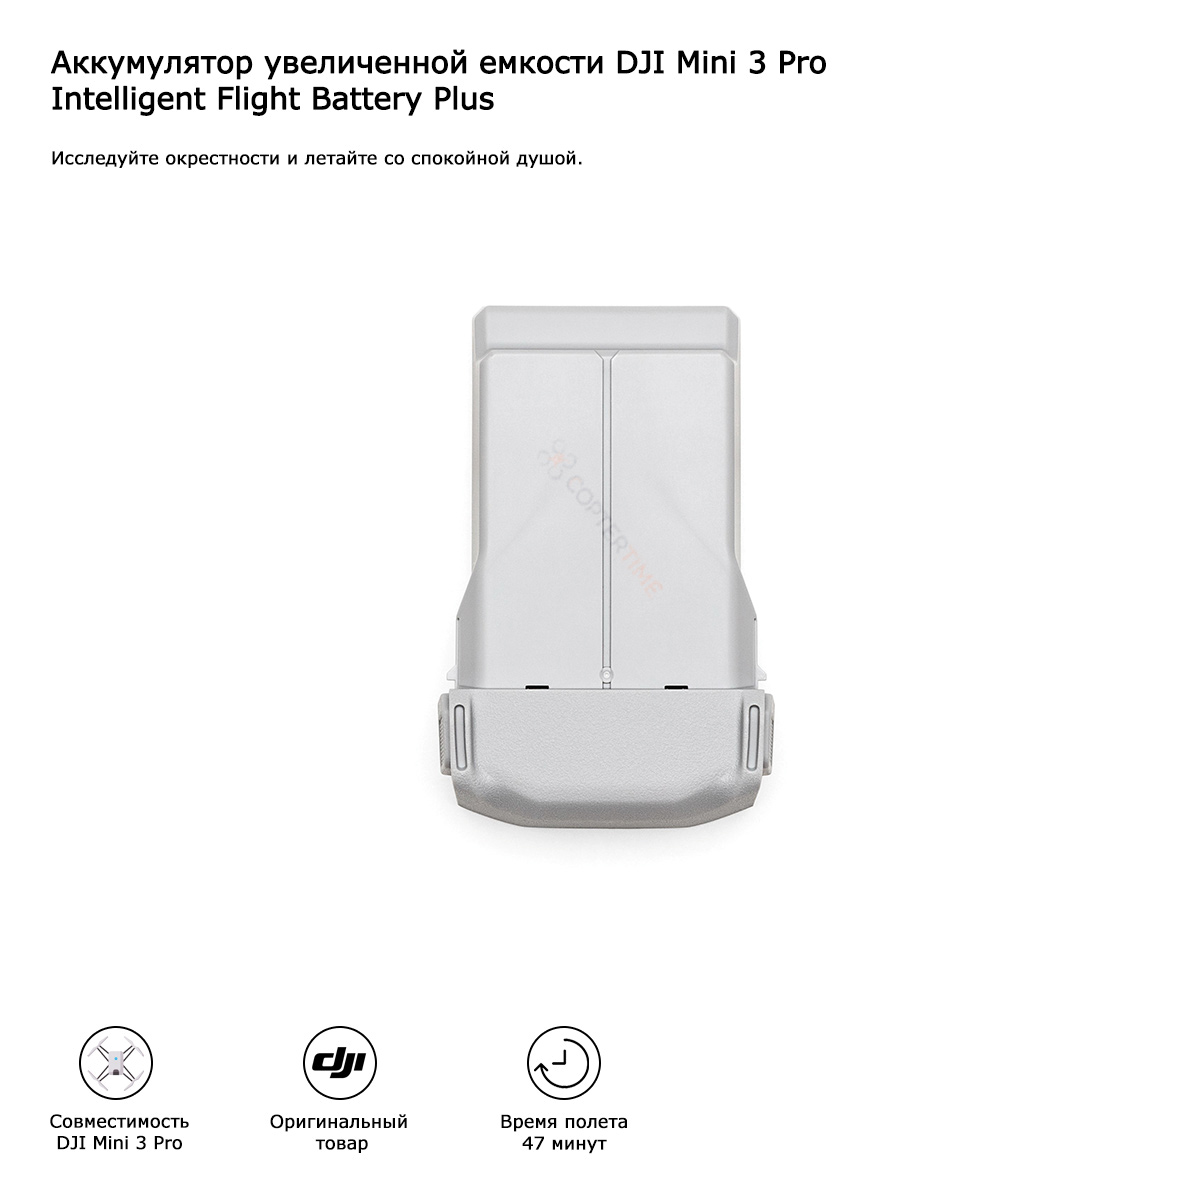 Аккумулятор увеличенной емкости DJI Mini 3 Pro Intelligent Flight Battery Plus